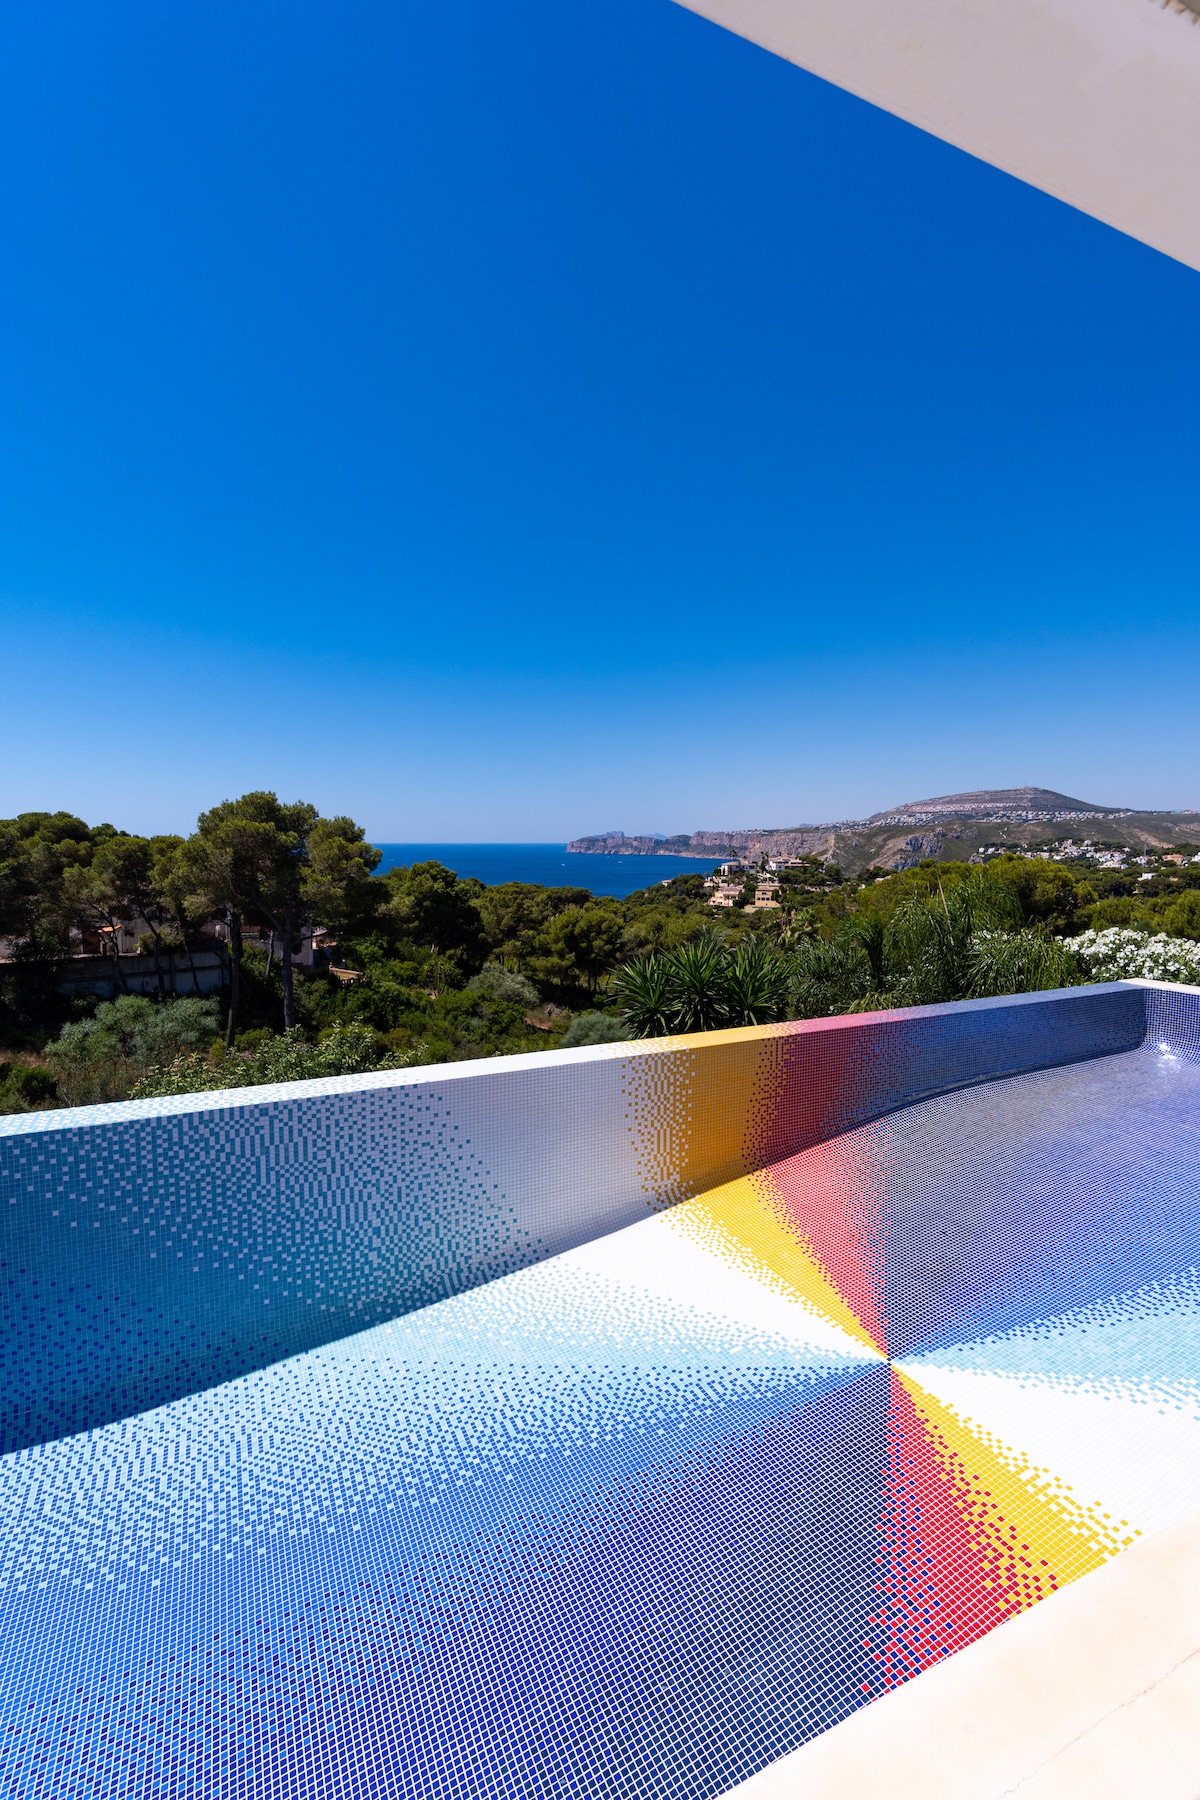 Chromatic Pool Design by Felipe Pantone